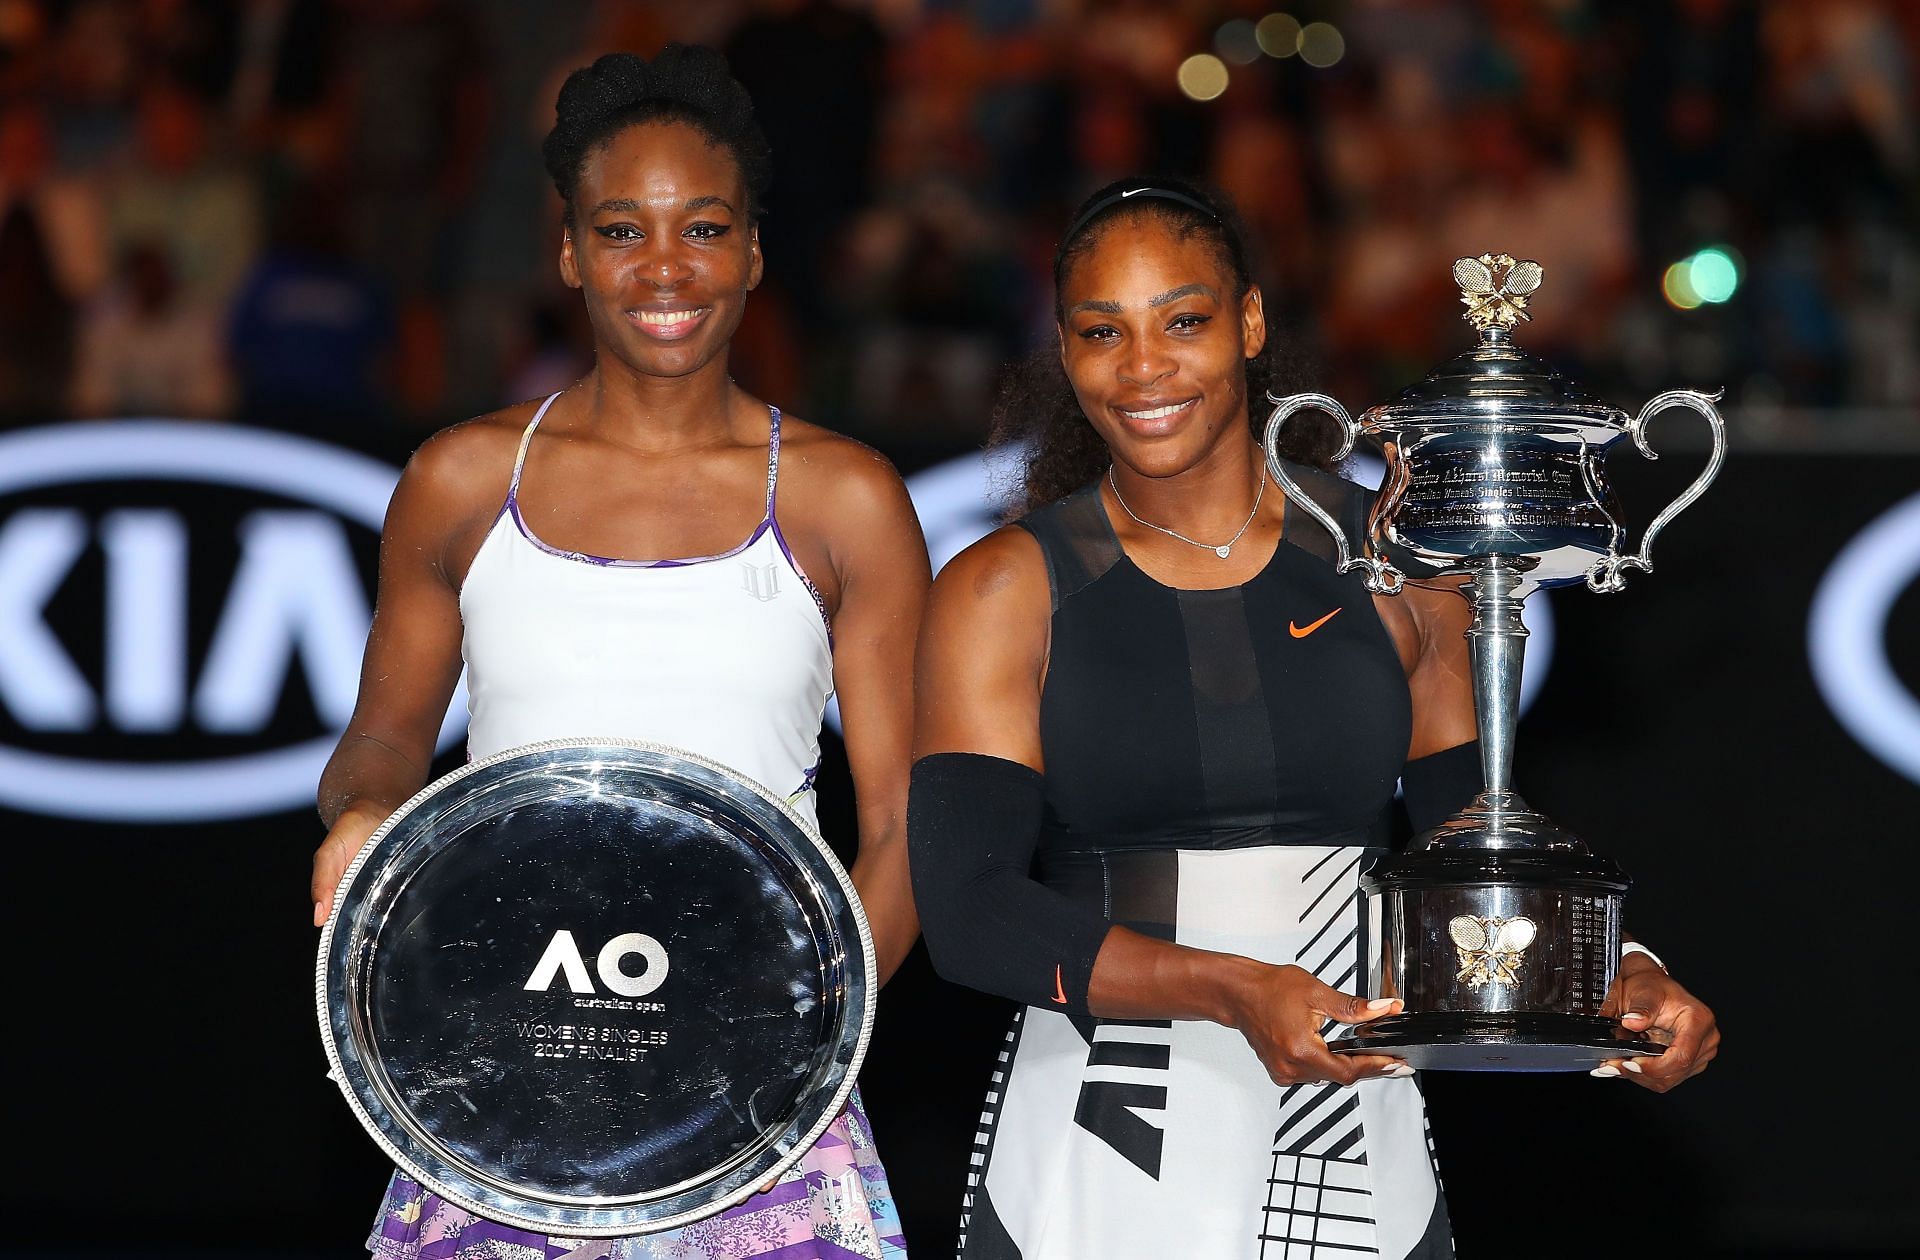 Serena and Venus Williams at the 2017 Australian Open